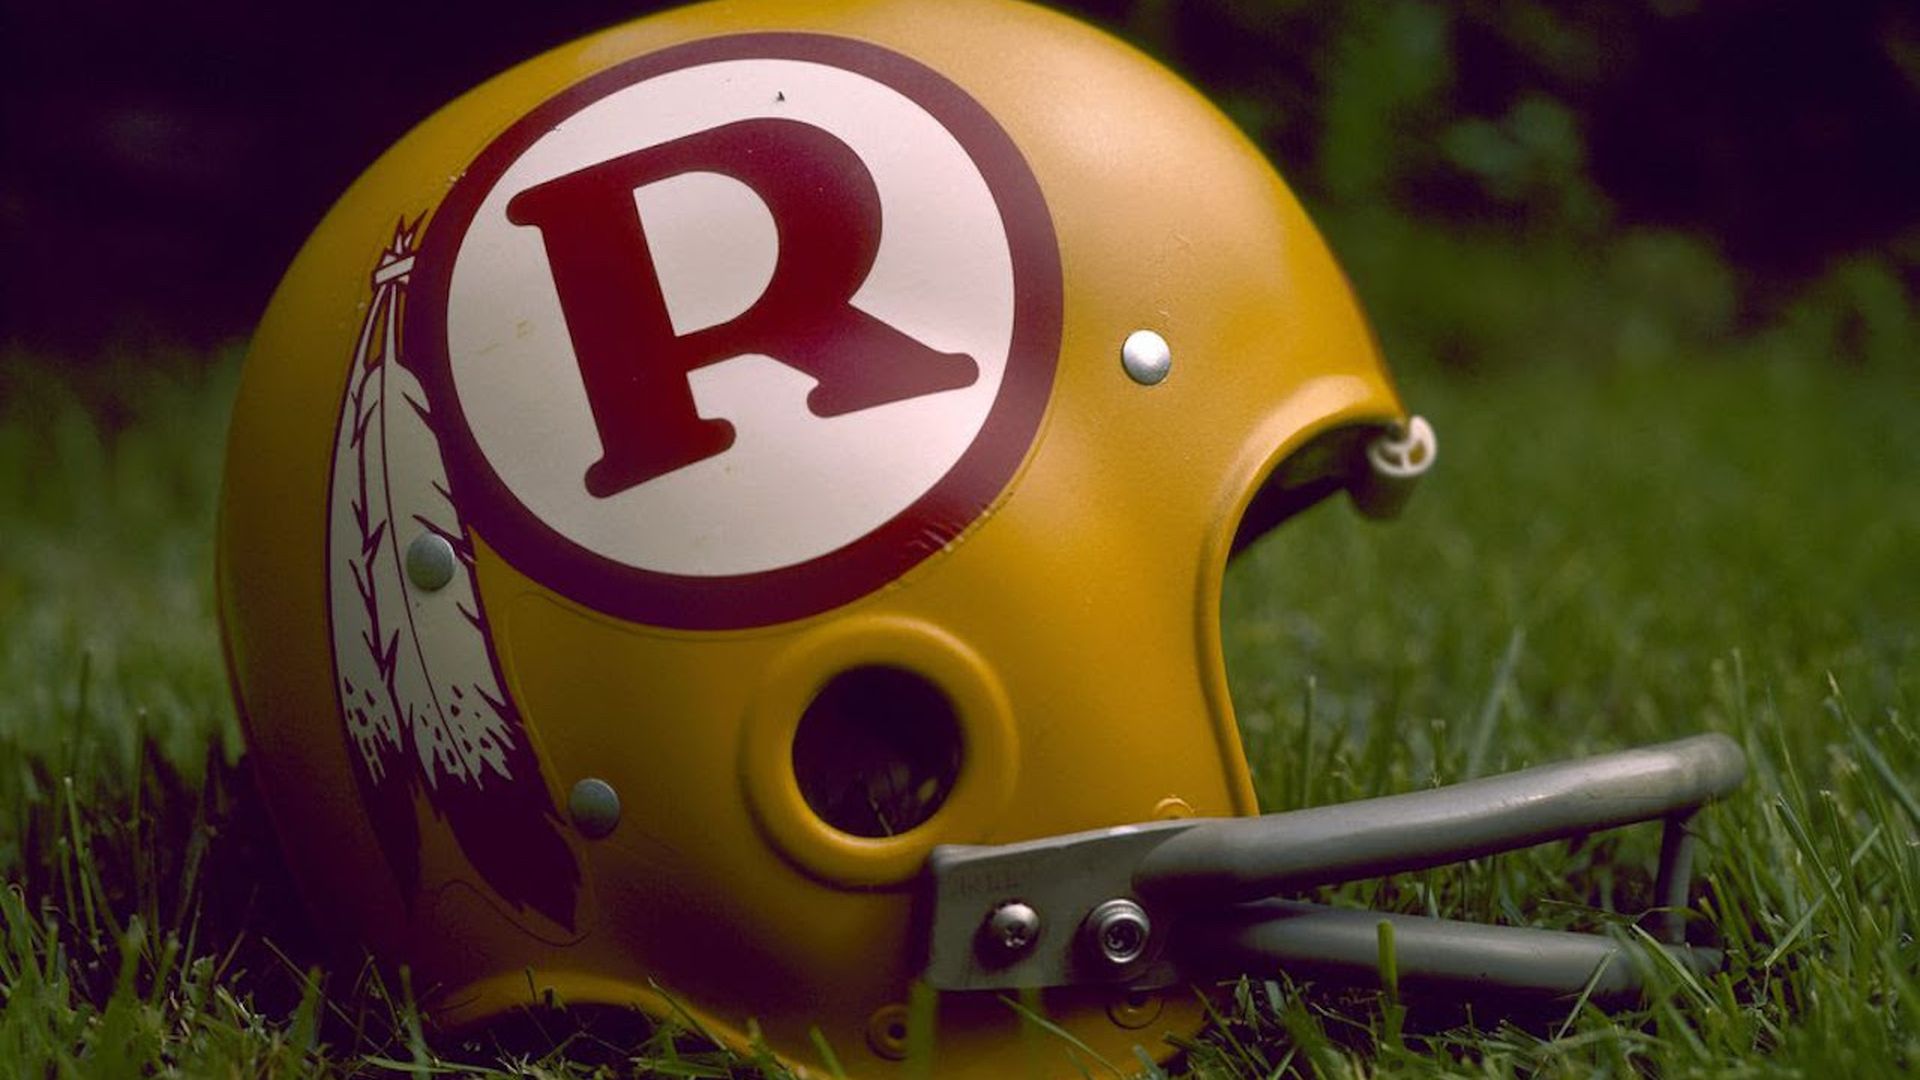 A vintage Redsins football helmet in some grass